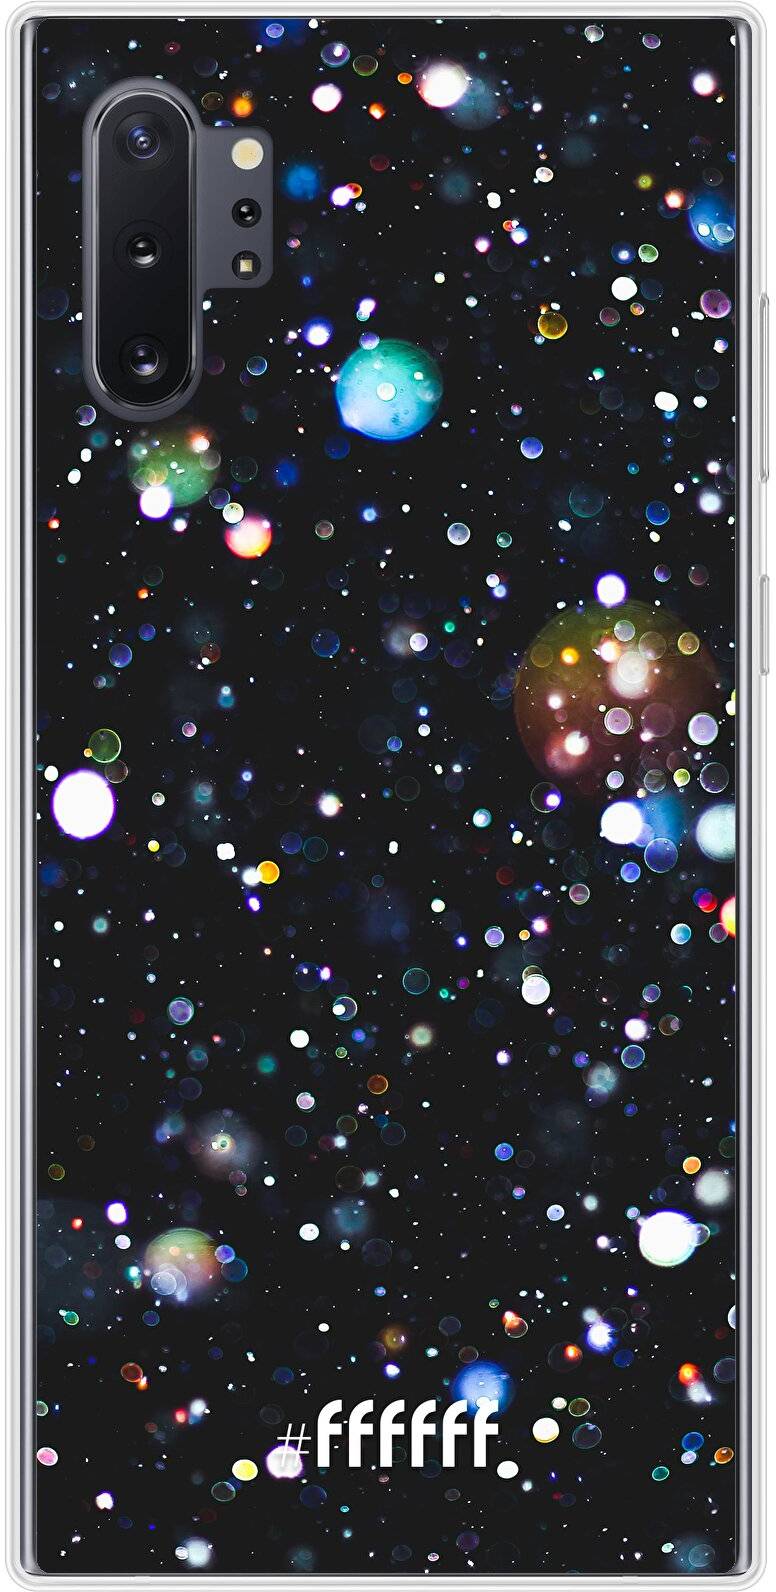 Galactic Bokeh Galaxy Note 10 Plus